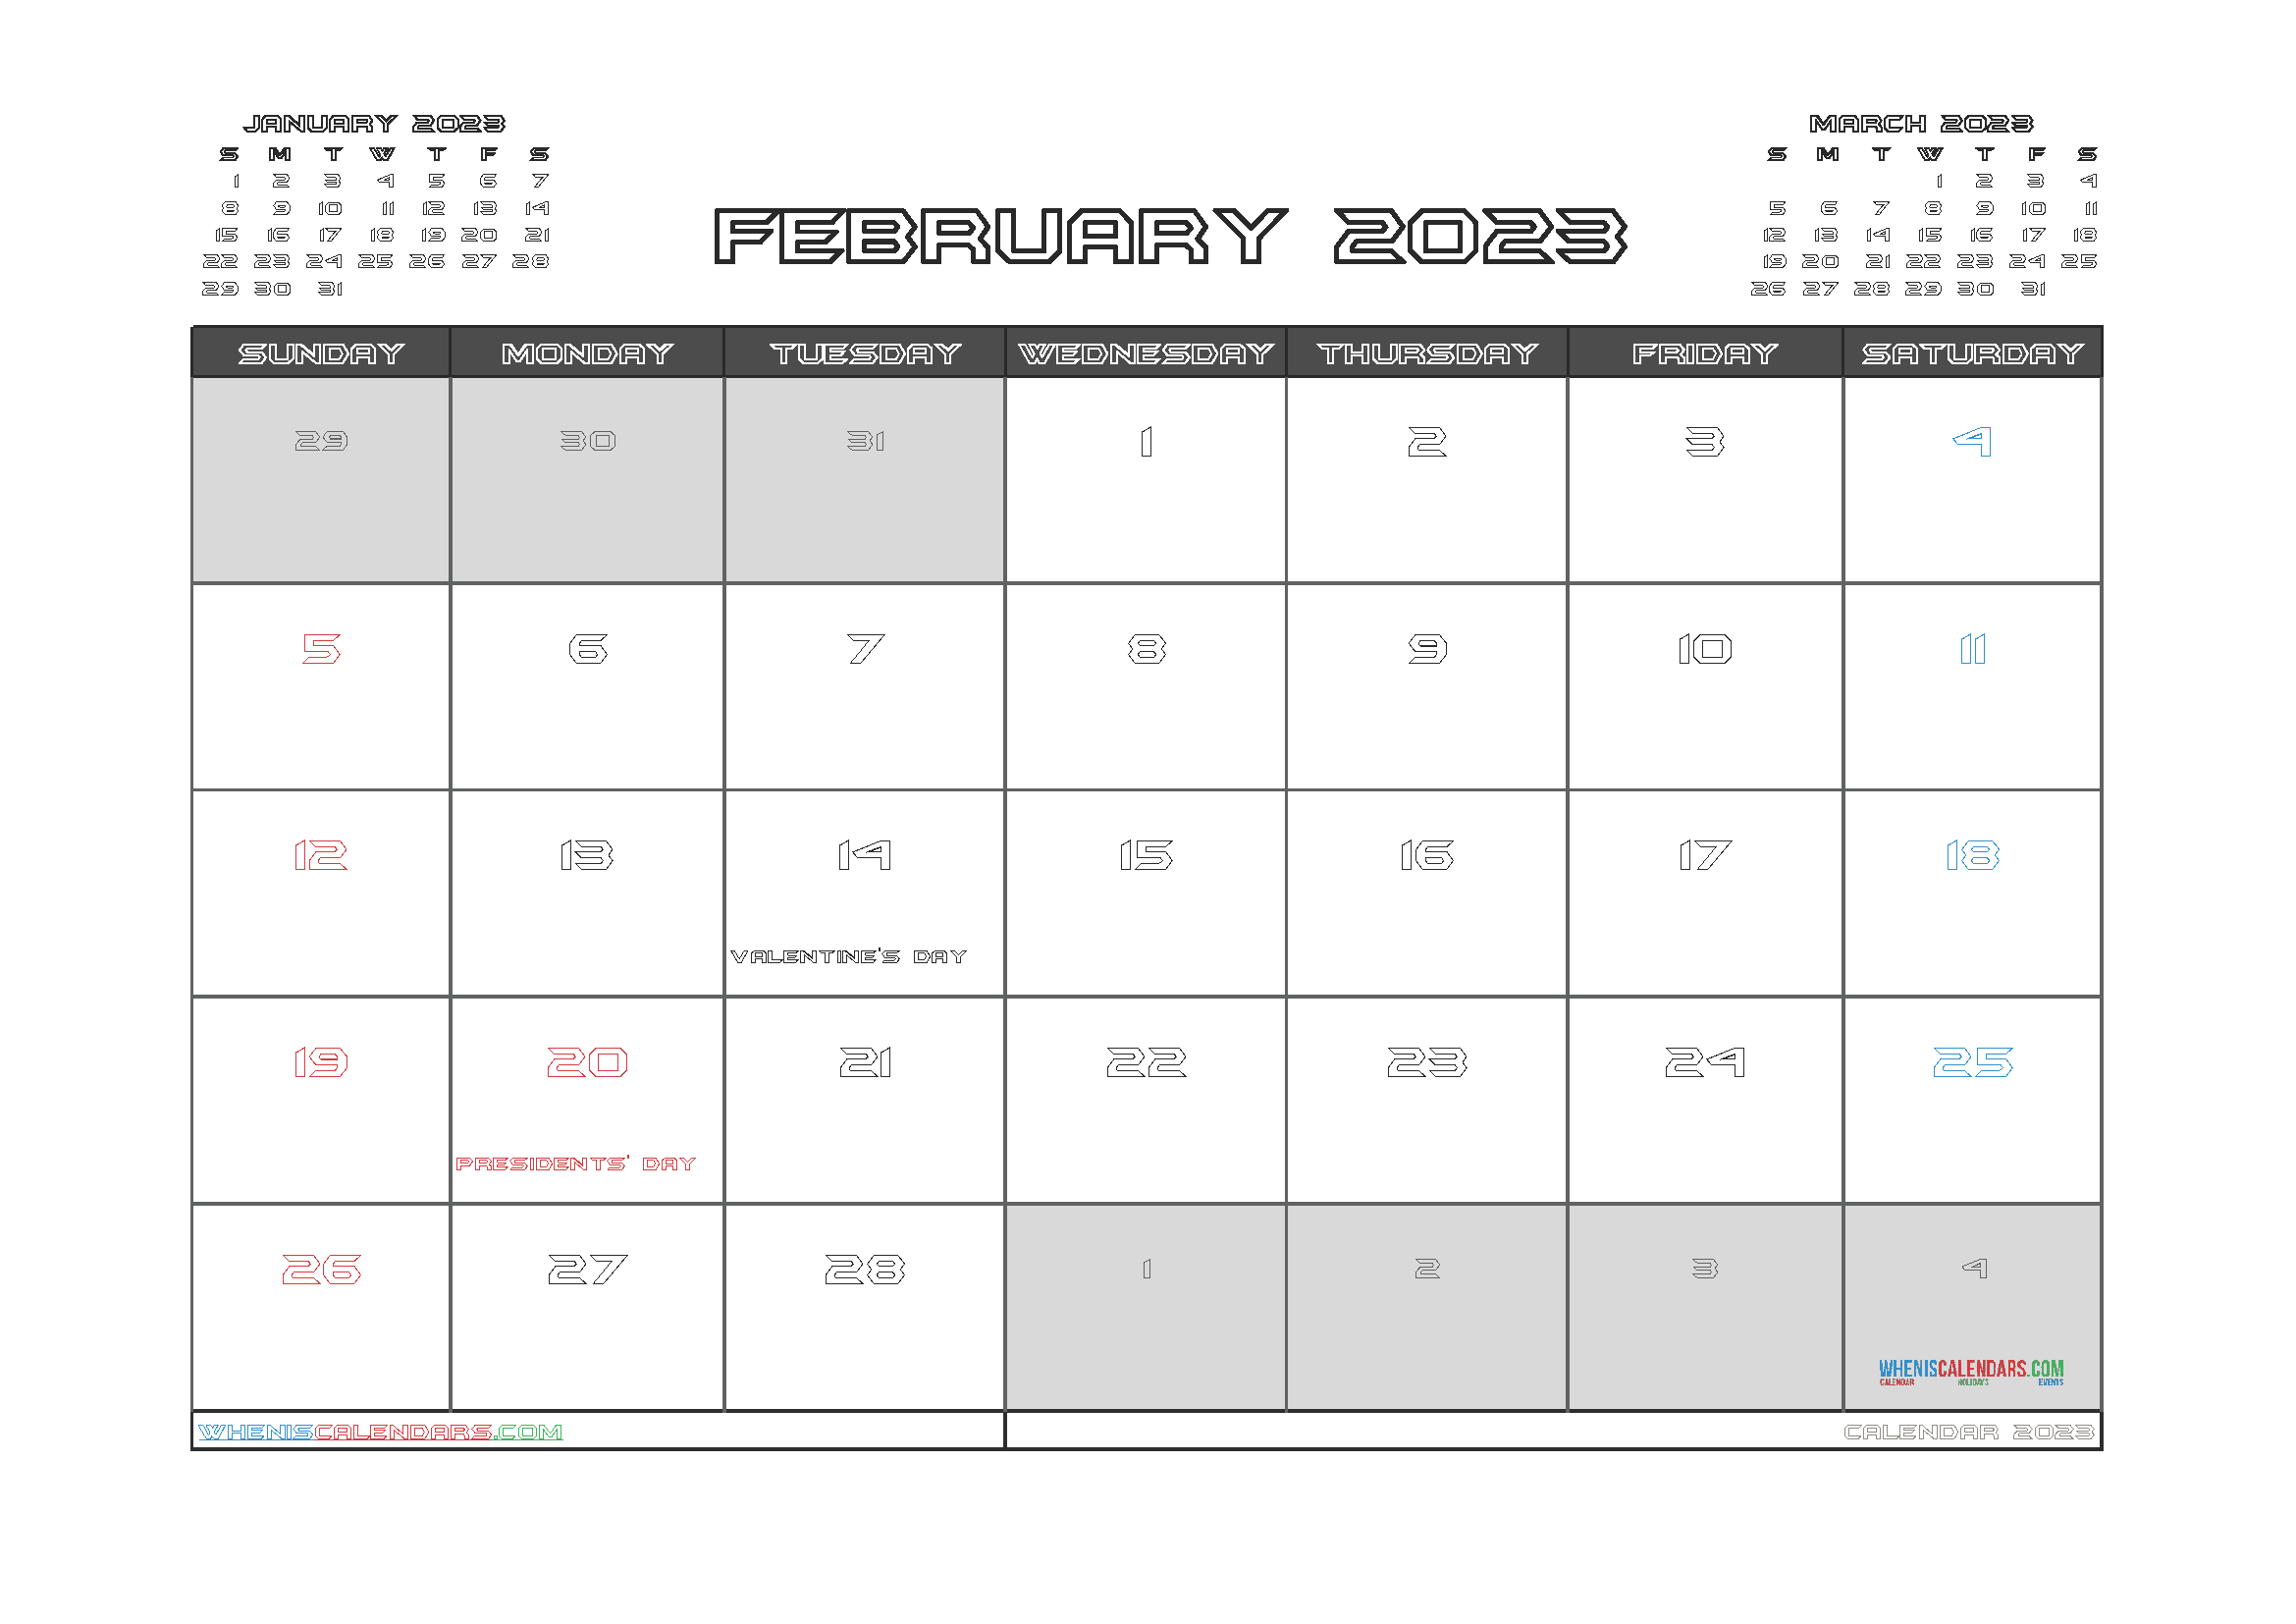 February 2023 Calendar with Holidays Printable